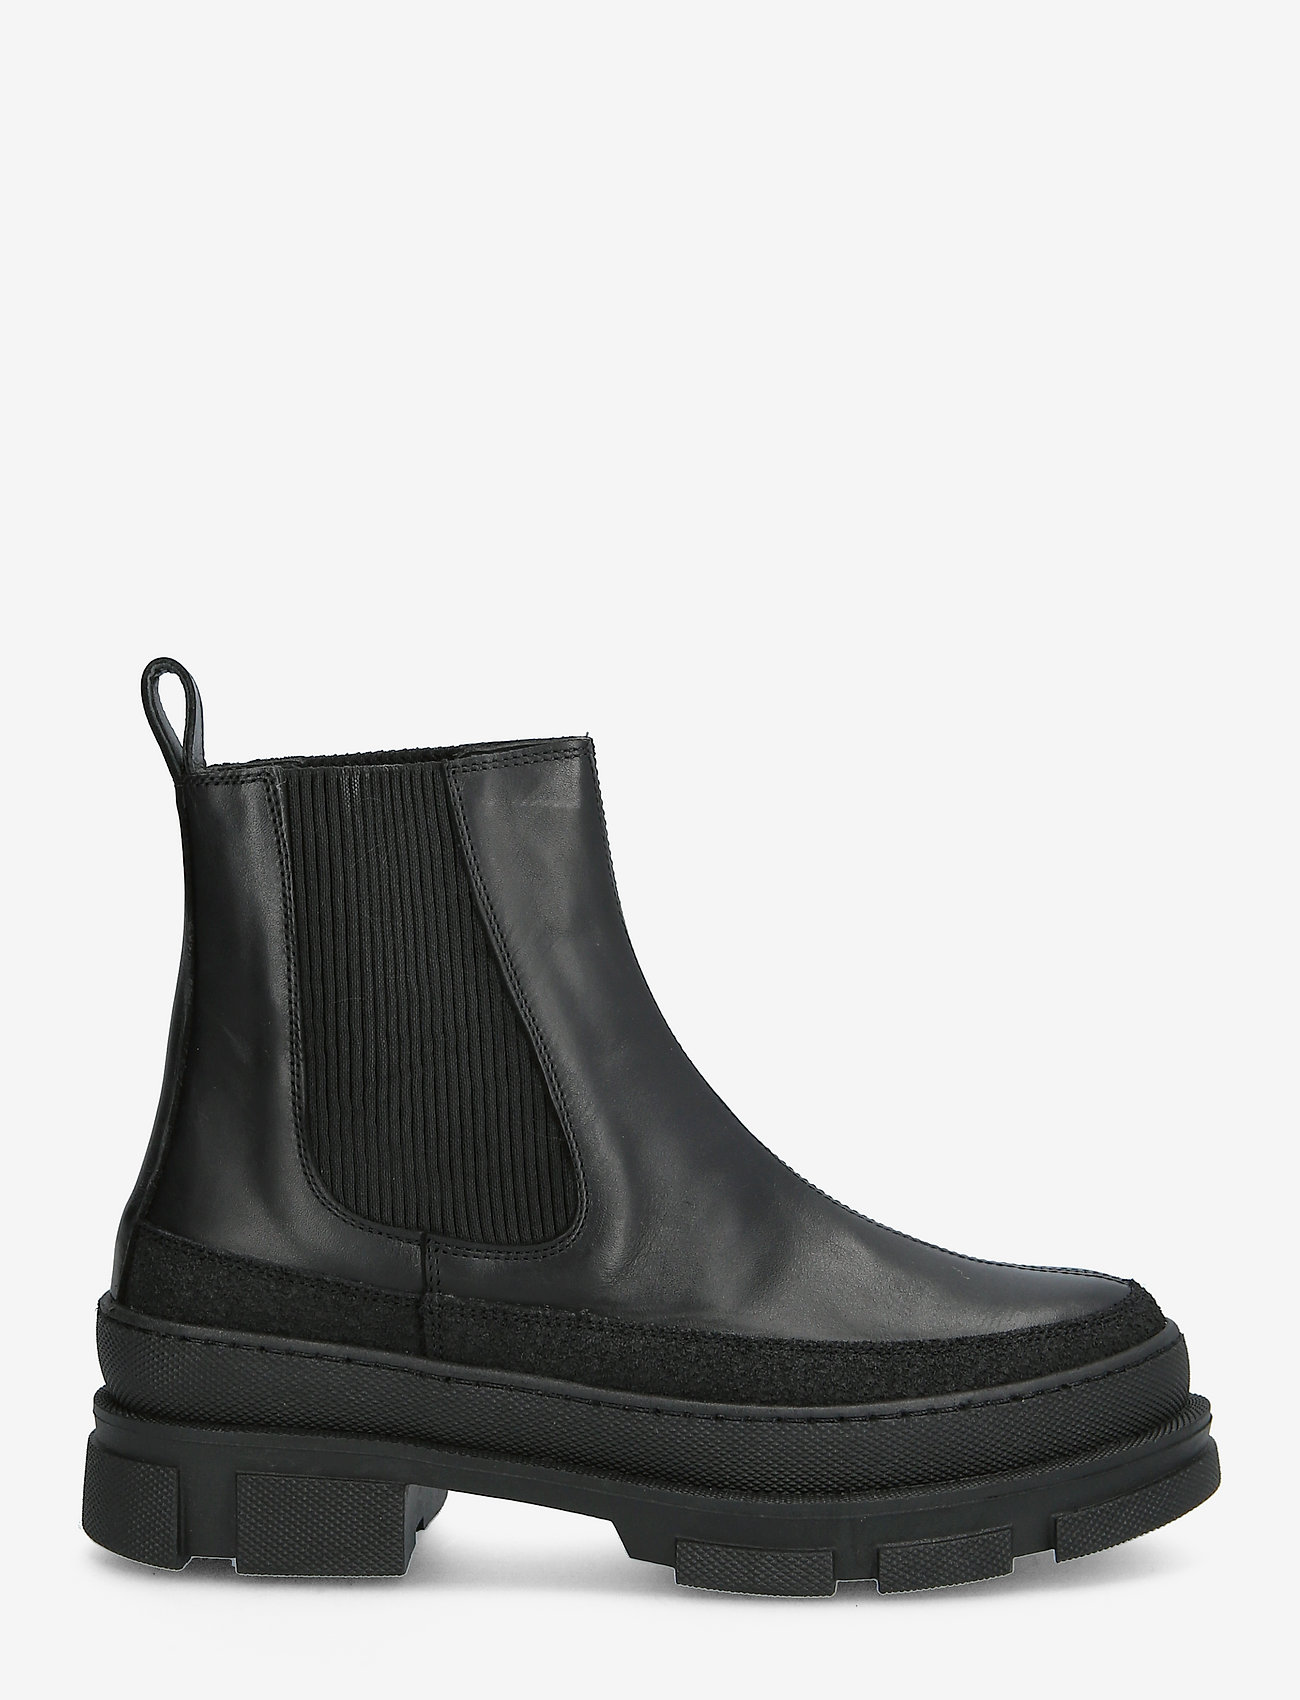 ANGULUS - Boots - flat - chelsea boots - 1321/1605/019 black/black/blac - 1